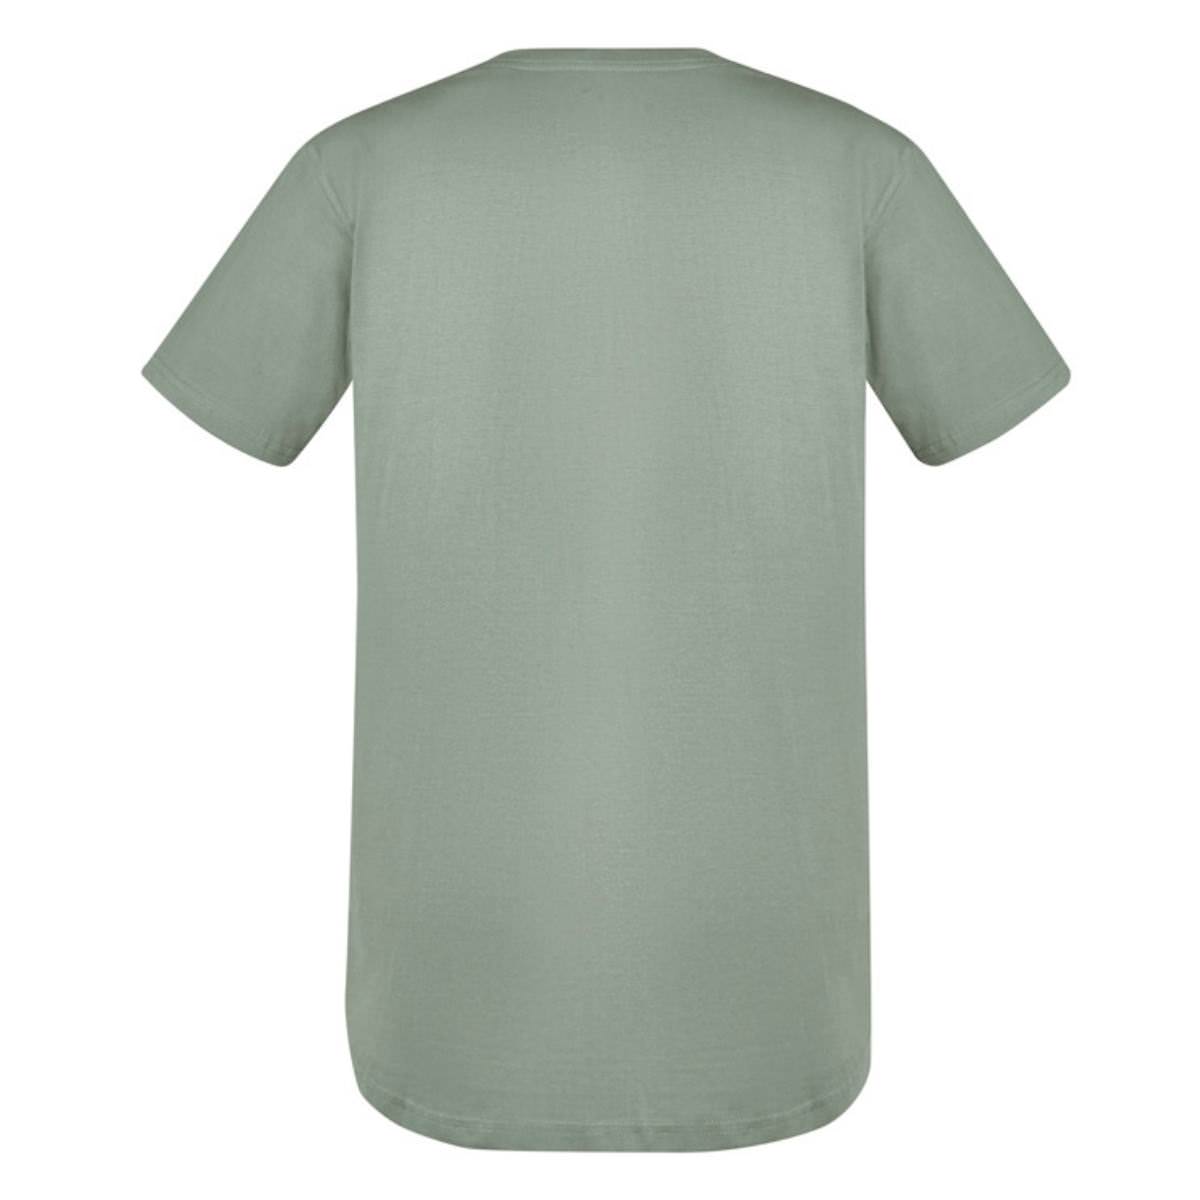 Syzmik Men's Streetworx T-Shirt ZH135